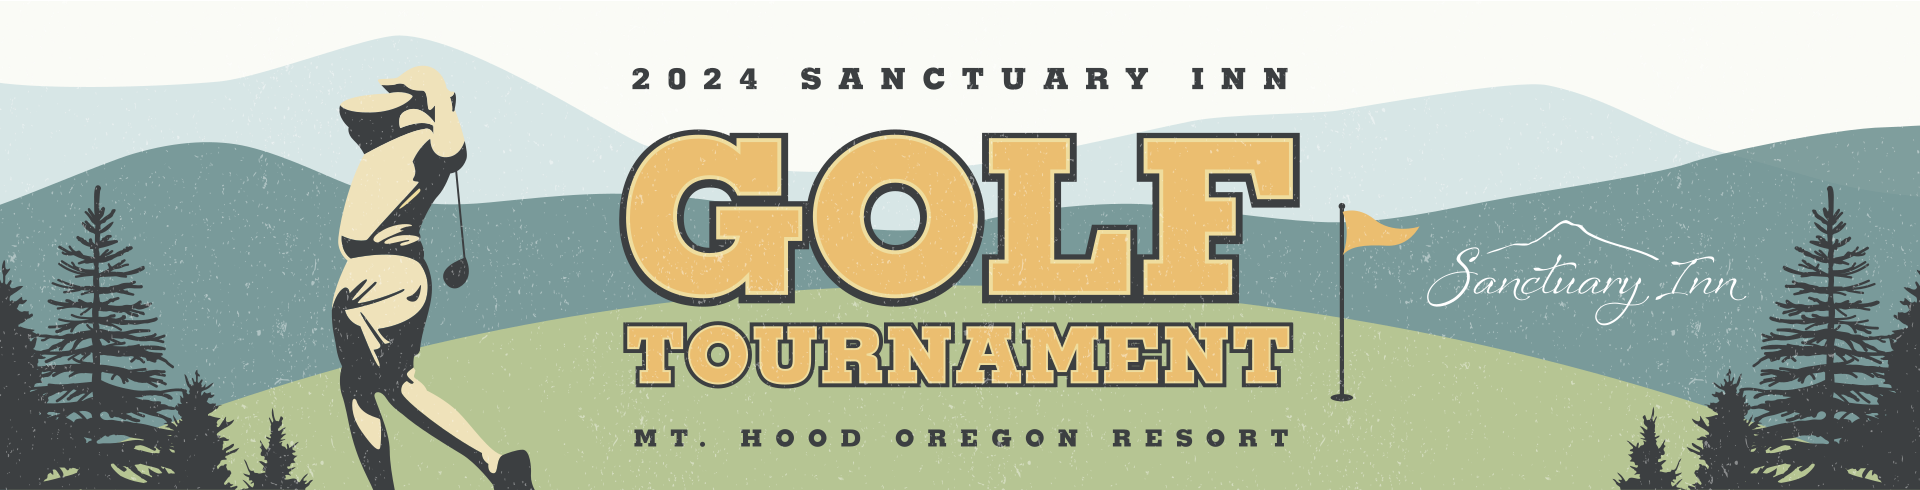 2024 Sanctuary Inn Golf Tournament - Mt. Hood Oregon Resort